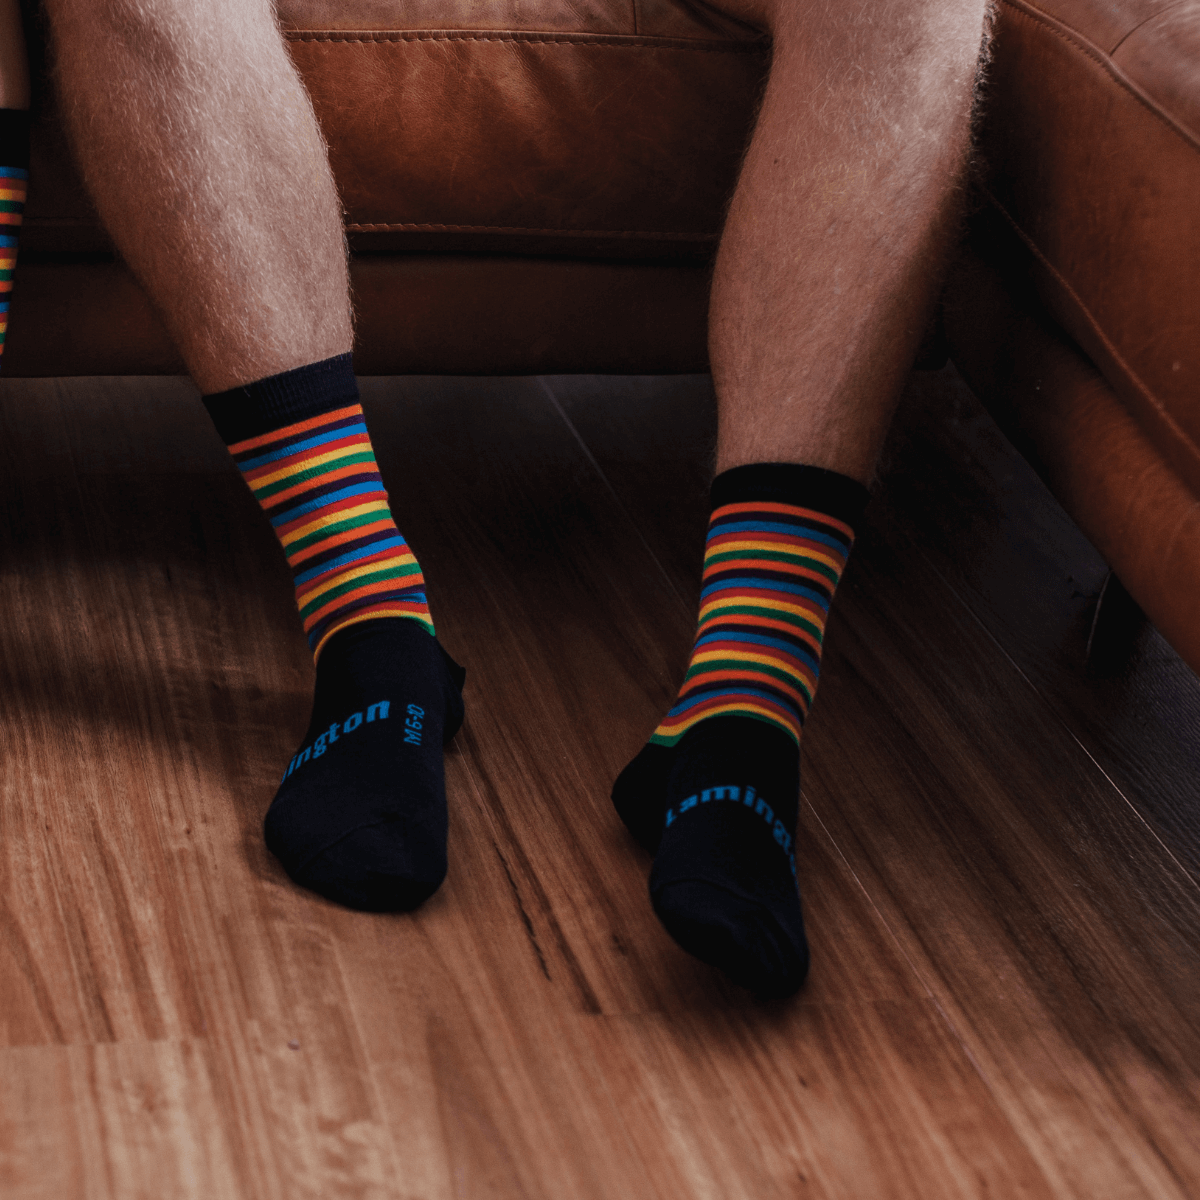 merino wool crew socks man woman rainbow nz aus